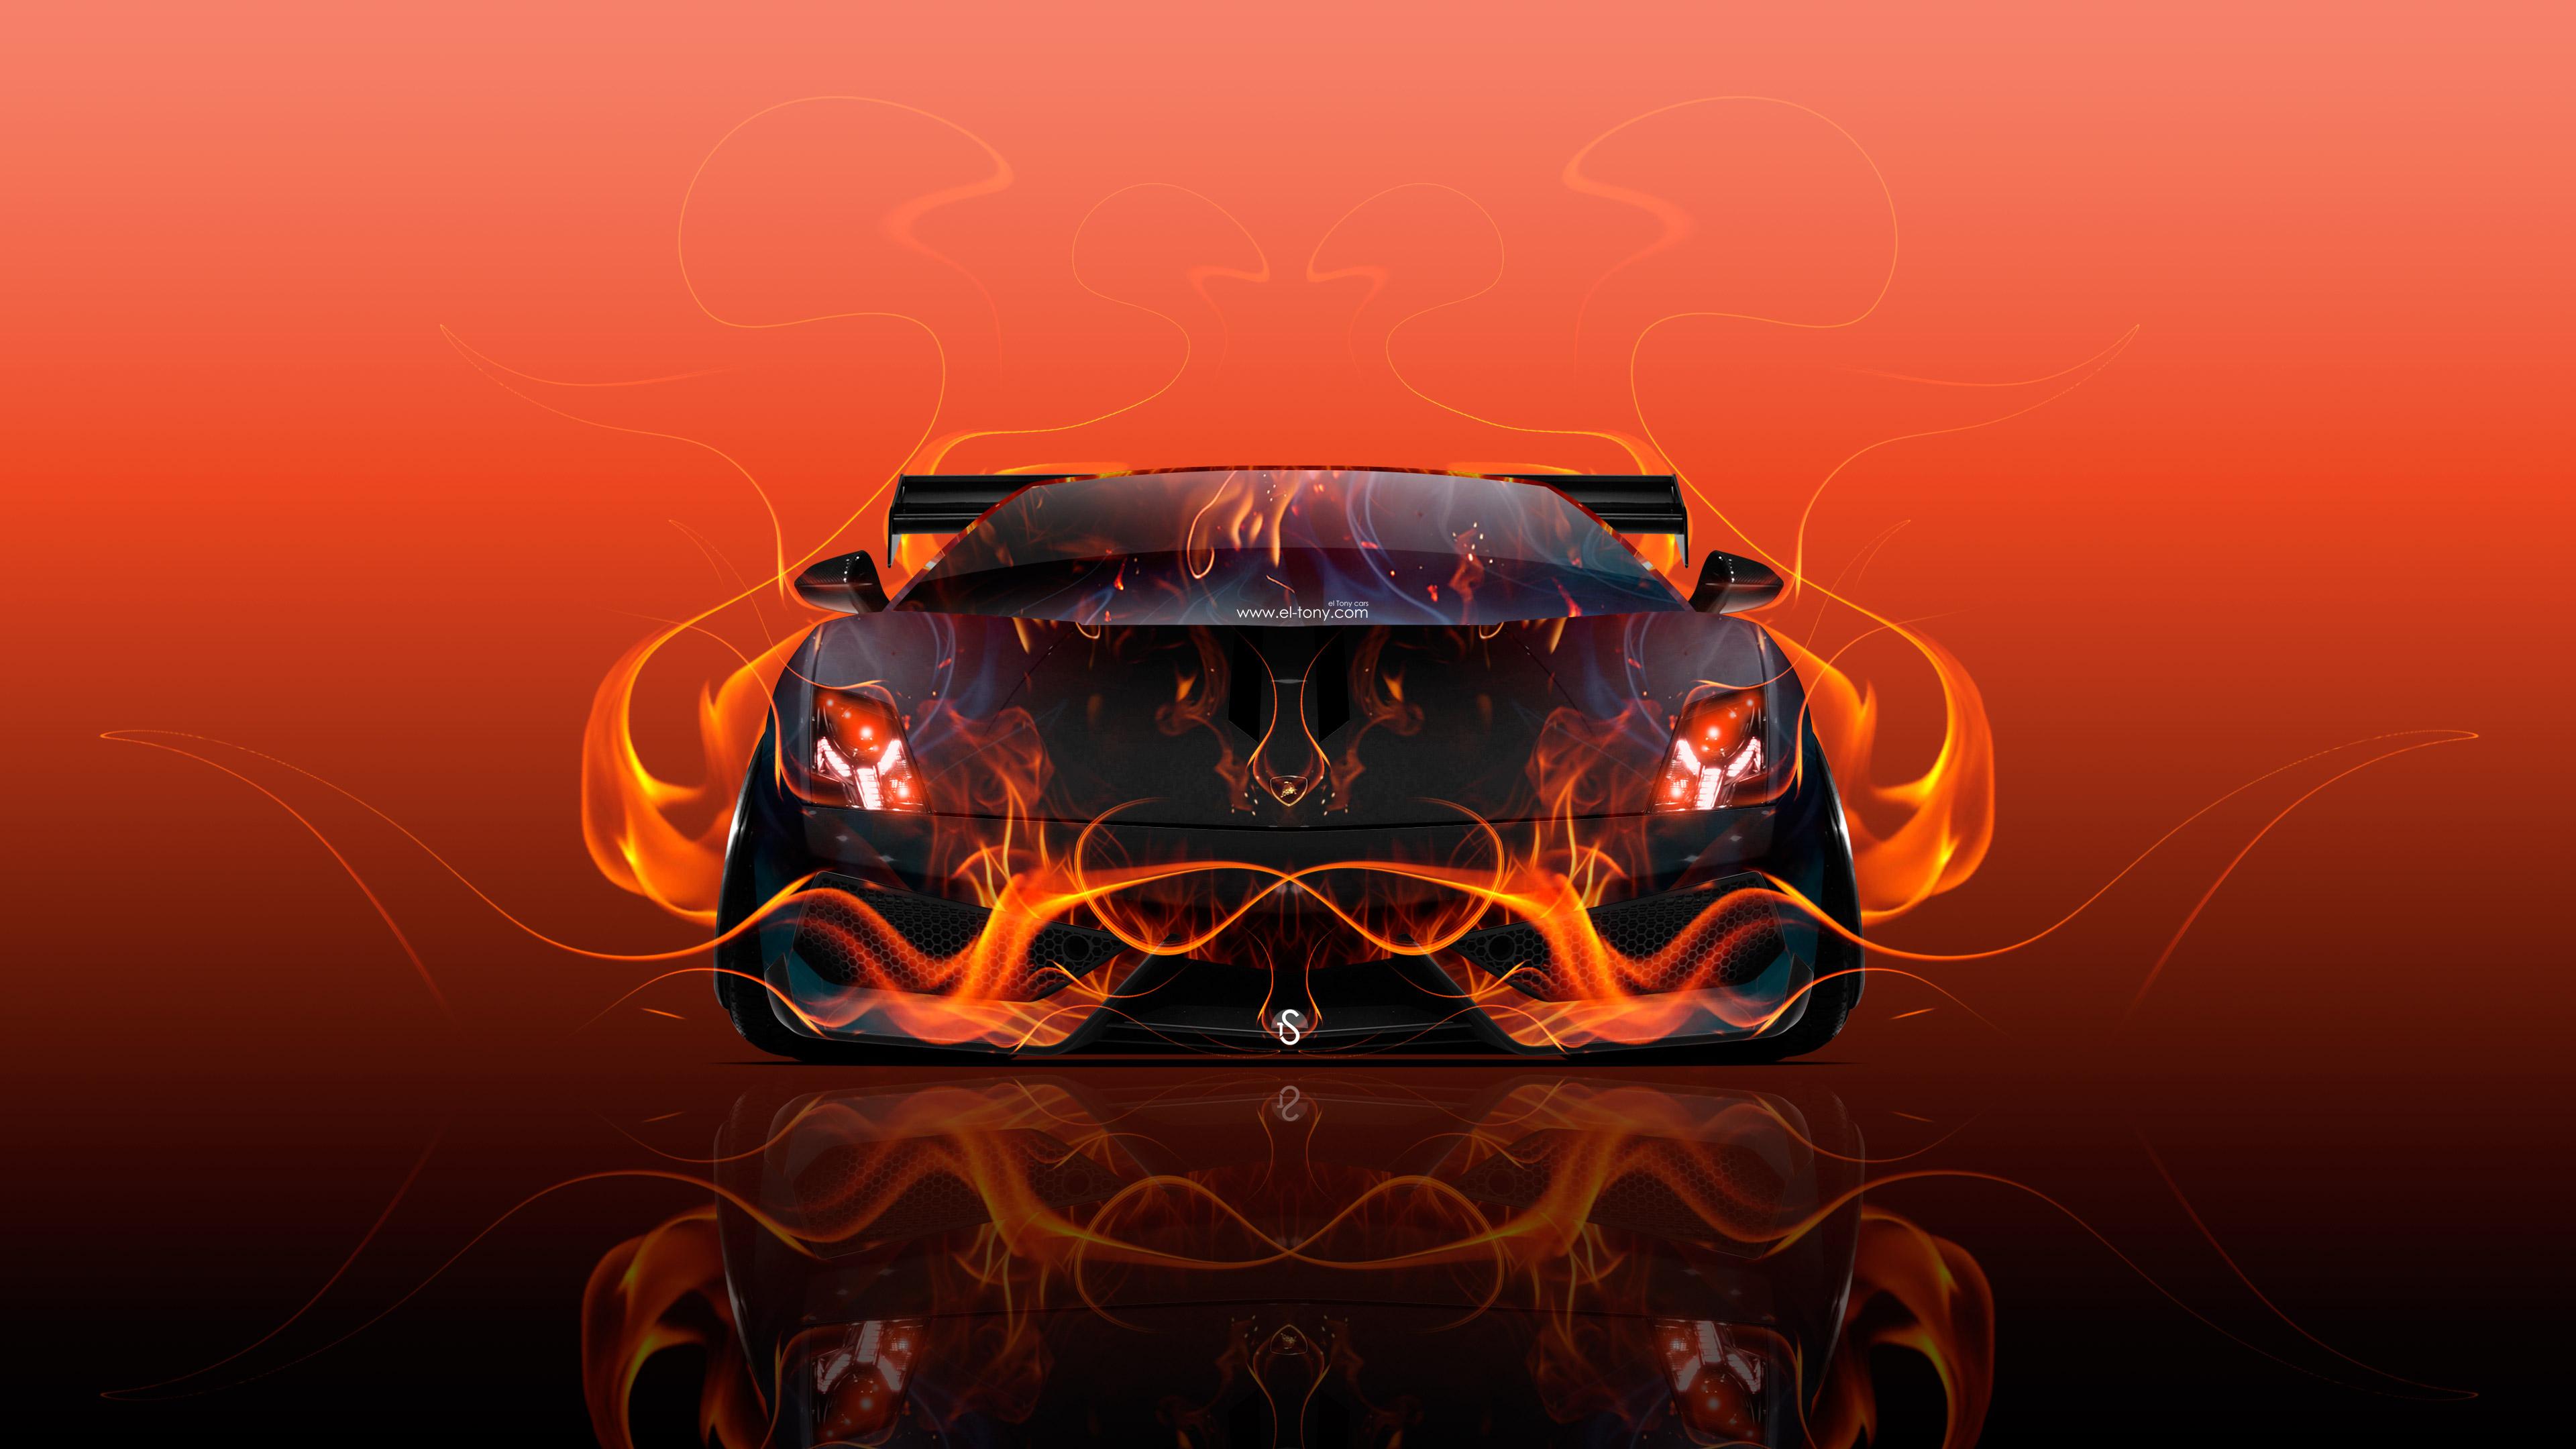 Lamborghini Gallardo Tuning Front Fire Abstract Car 2015